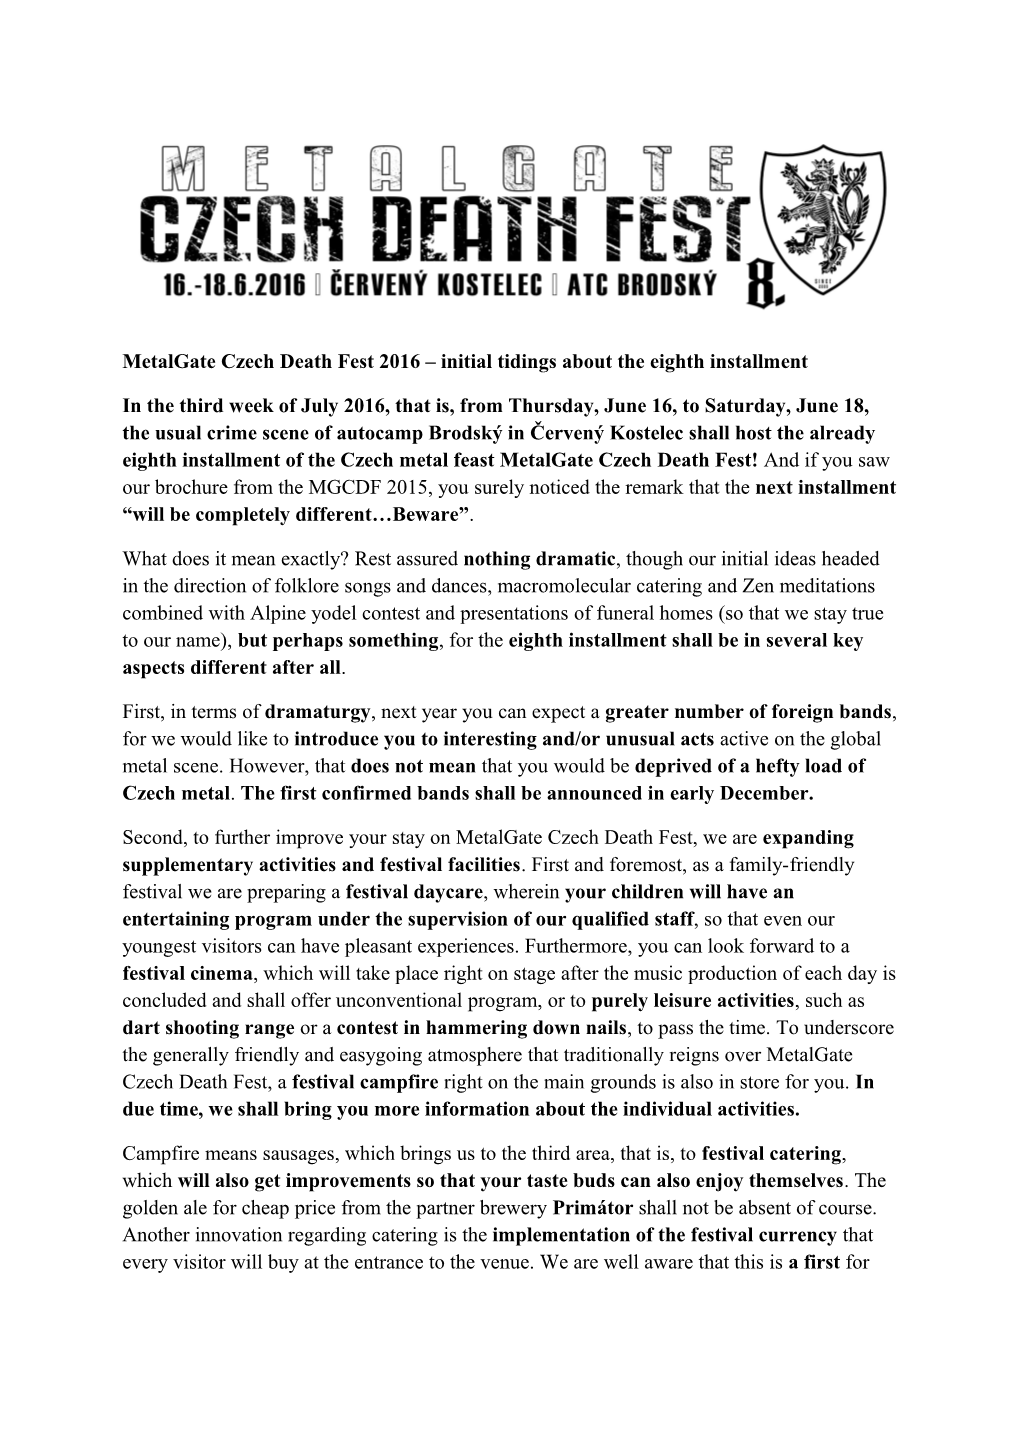 Metalgate Czech Death Fest 2016 Initial Tidings About the Eighth Installment